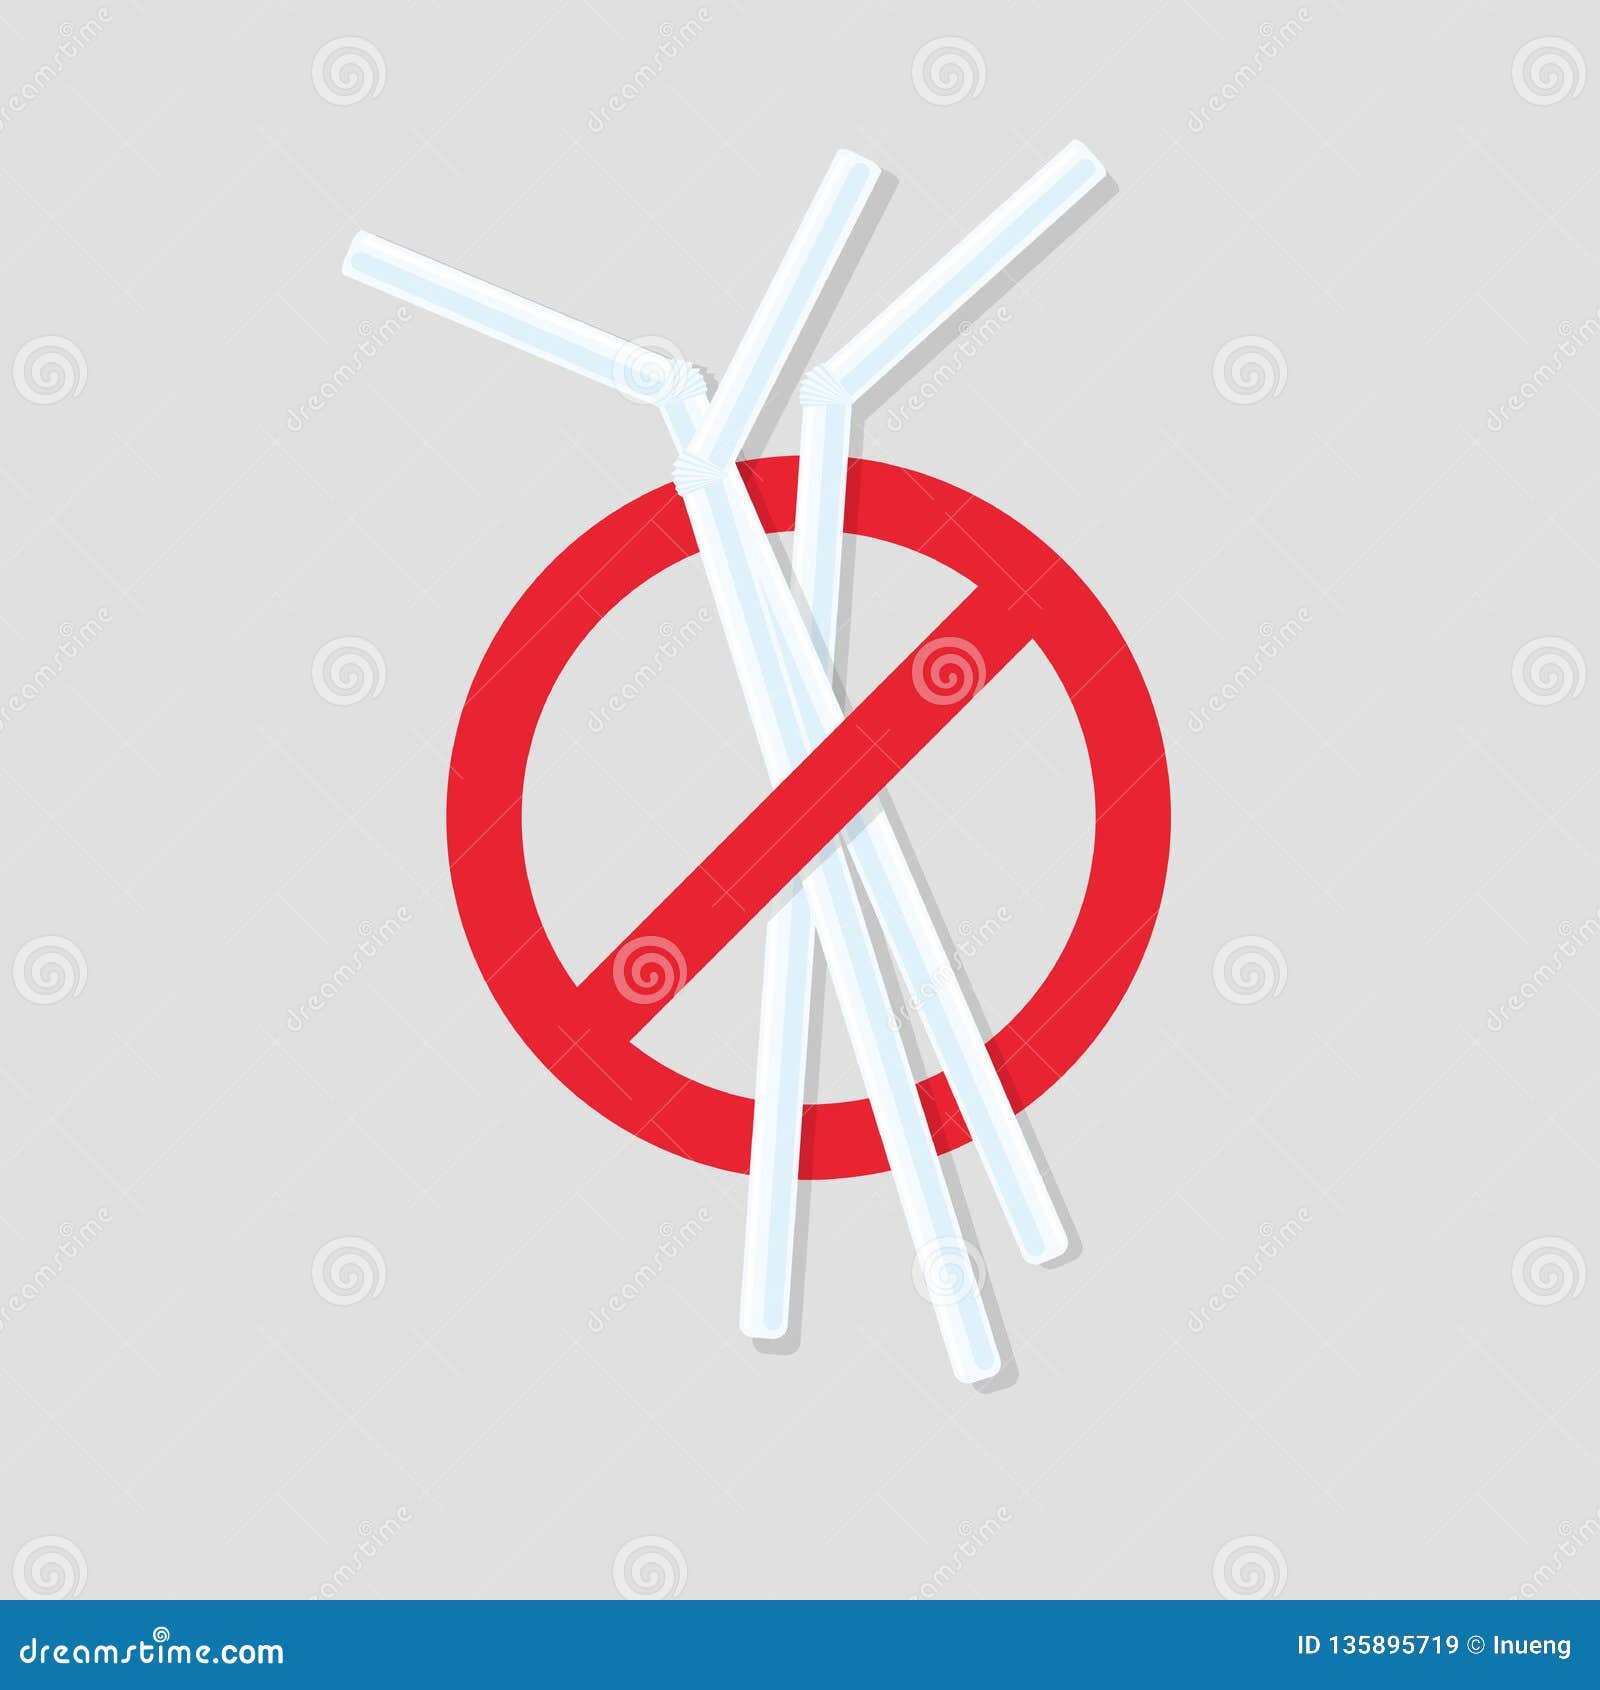 no plastic straws icon.